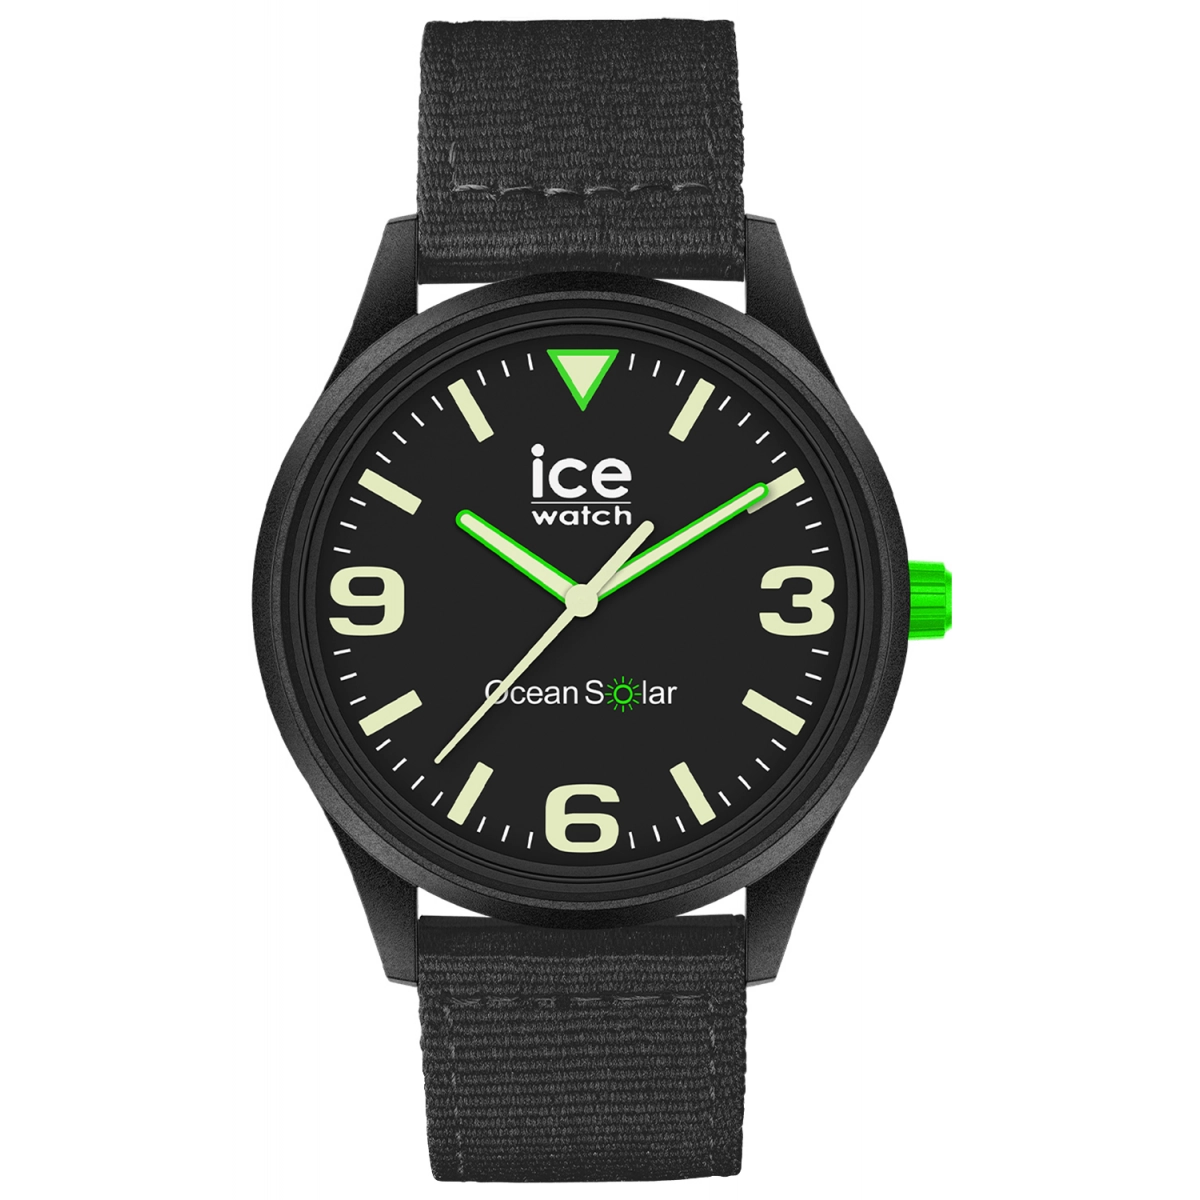 RELOJ ANALOGICO DE UNISEX ICE 019647 Ice watch